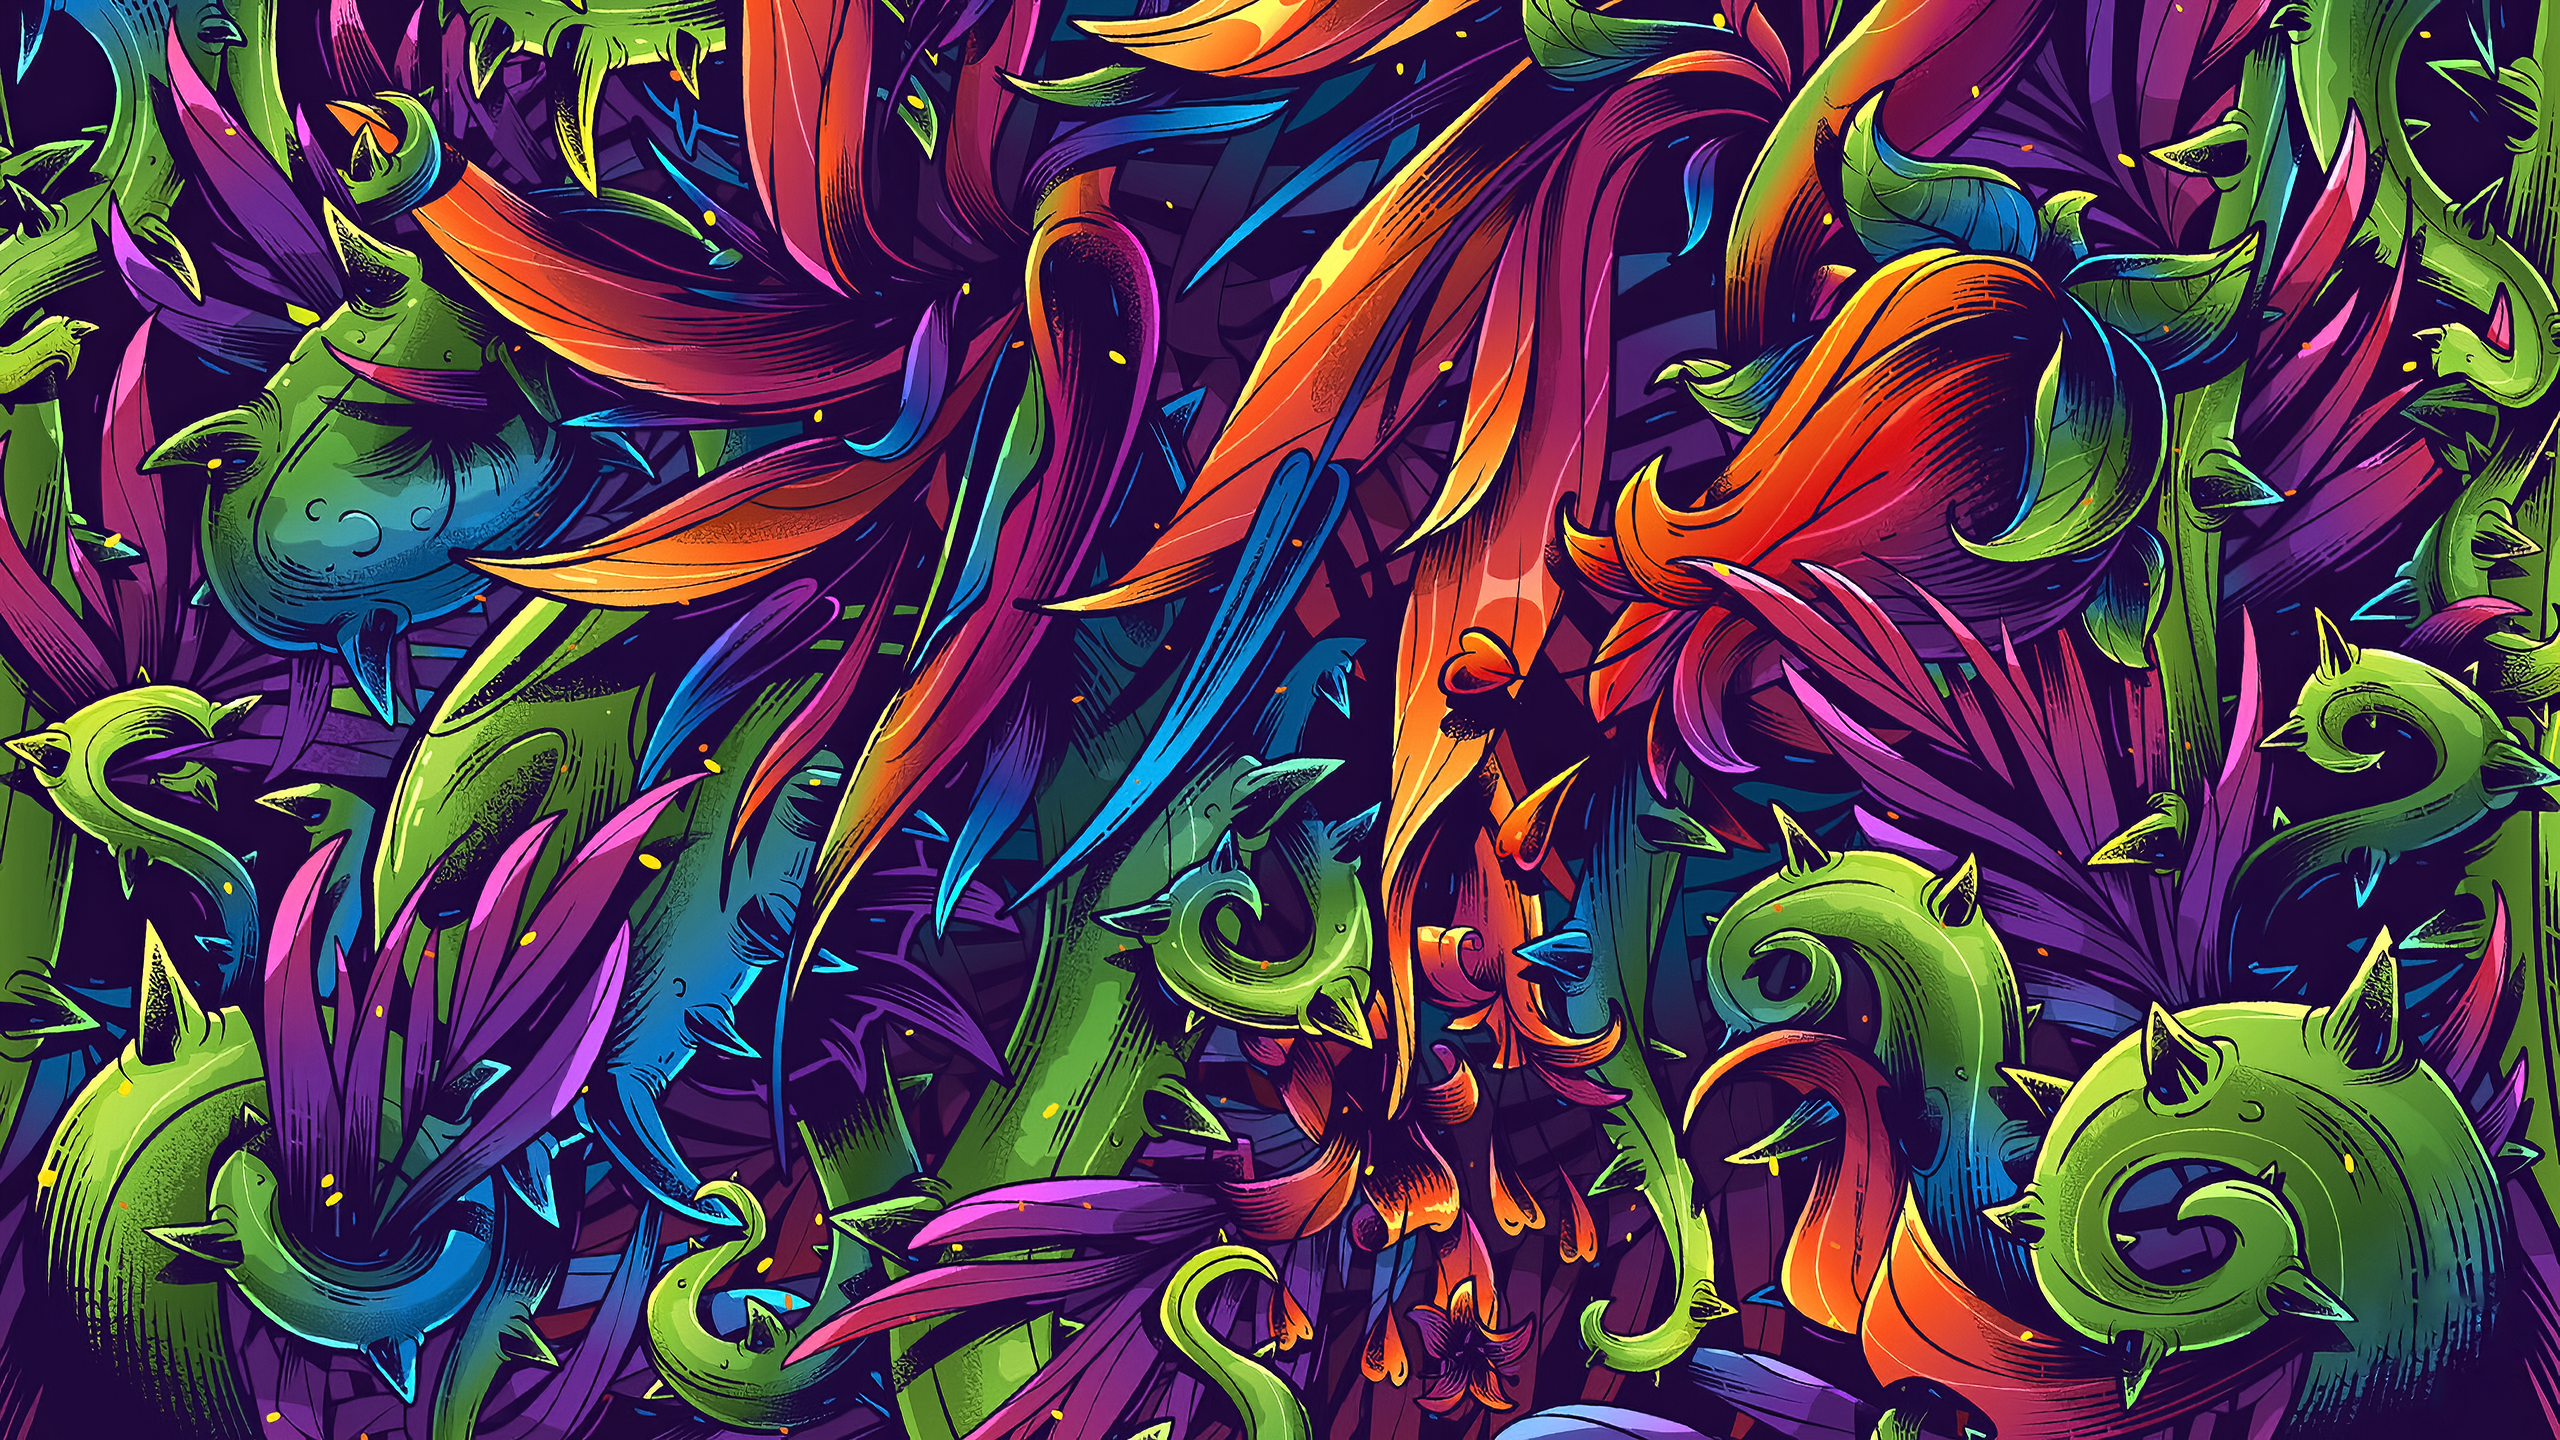 Artwork Colorful Digital Art Abstract Leaves Plants Yaroslav Slavinskiy Thorns 2560x1440